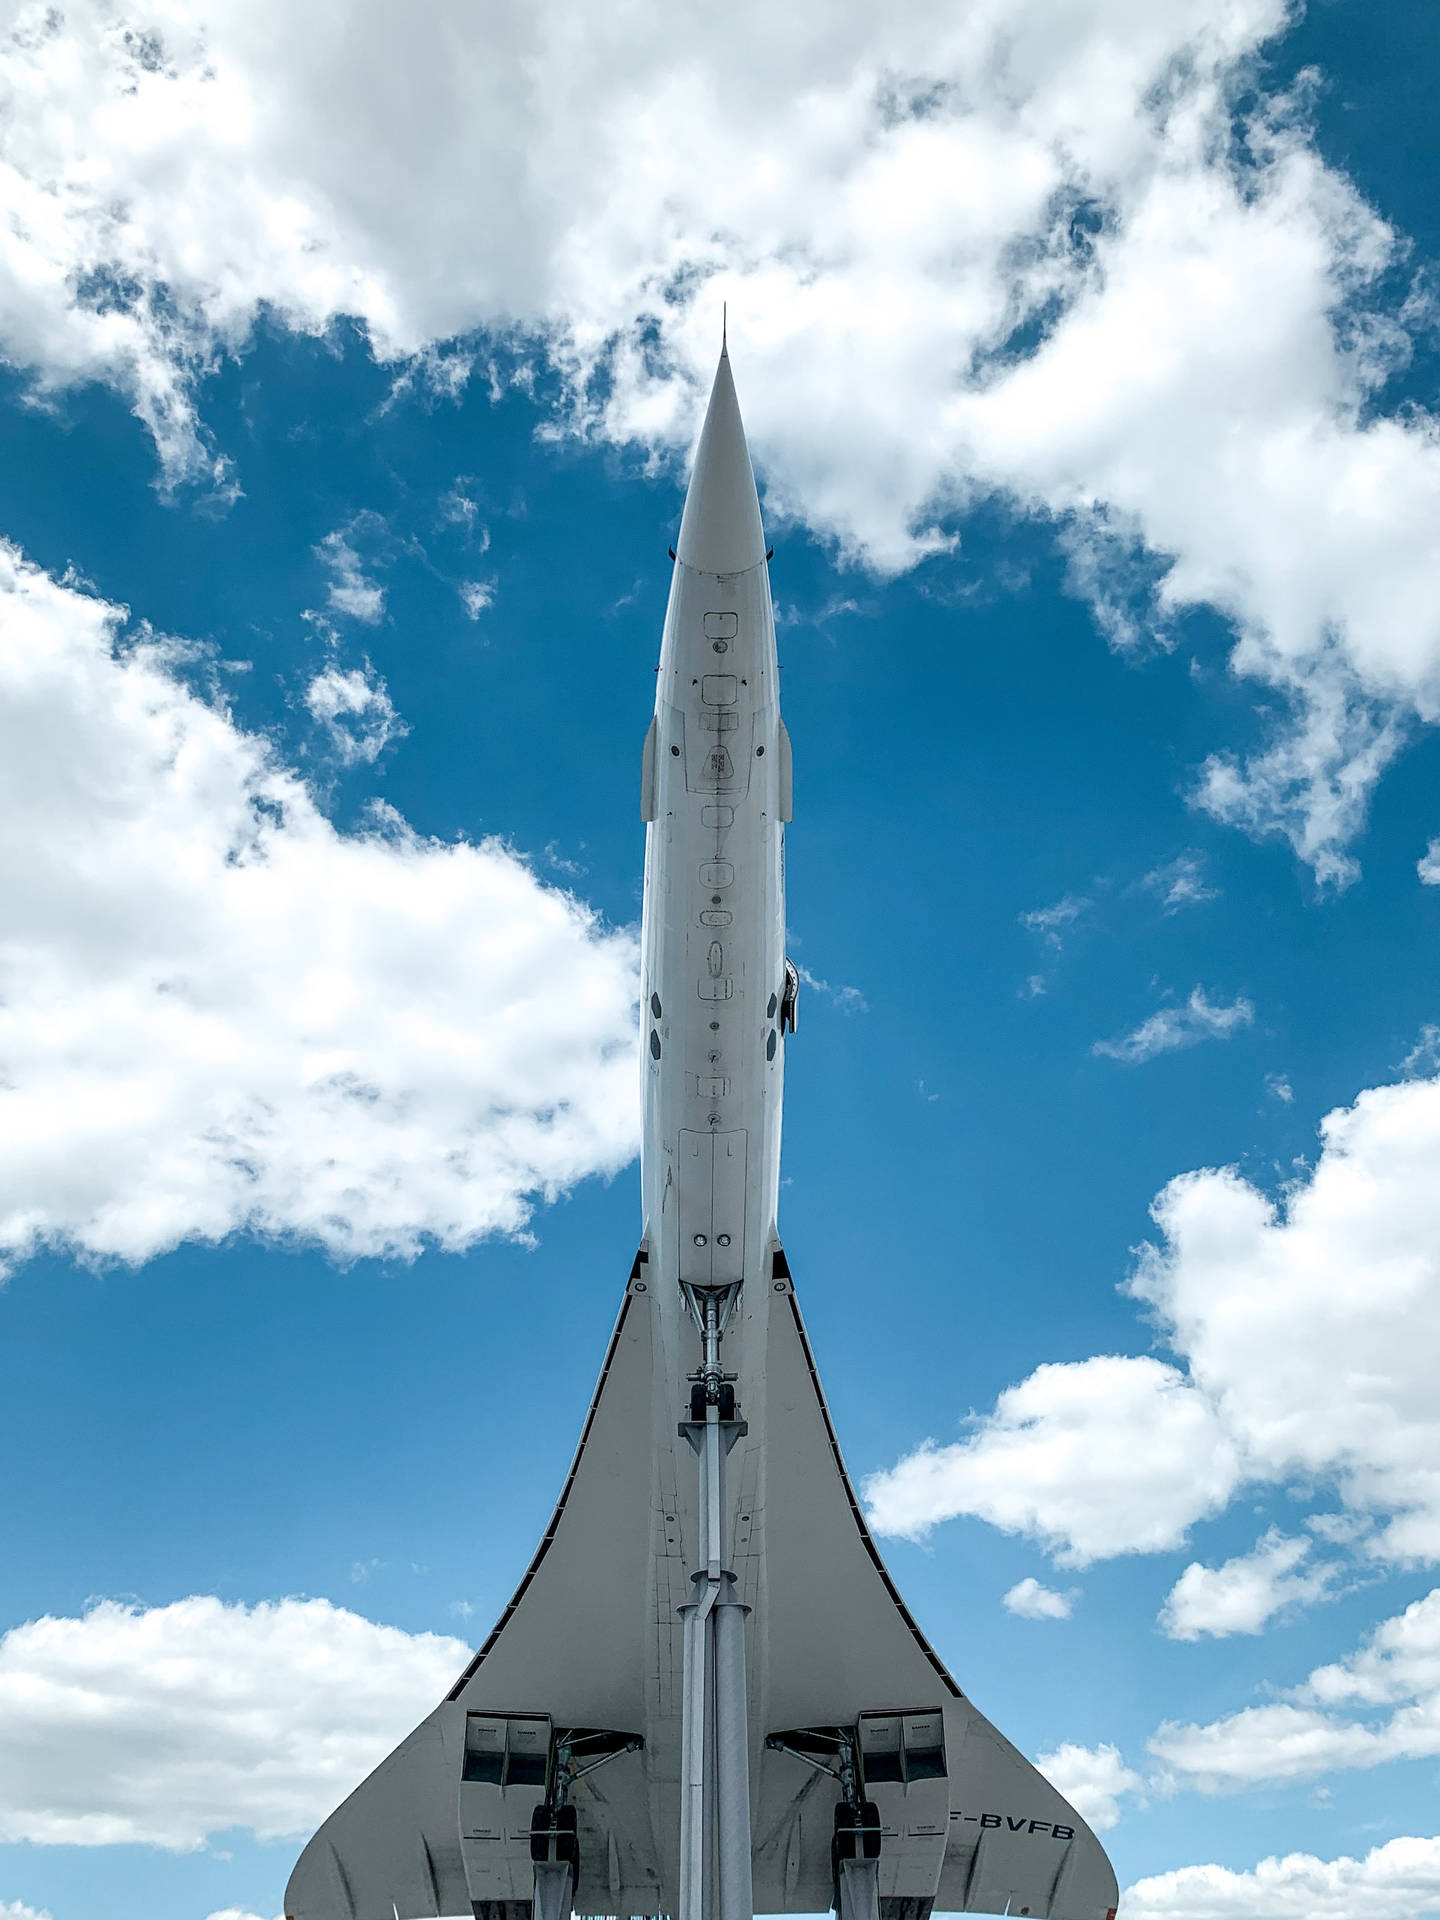 Flygplanconcorde Överljudsflygplan. (aviation Concorde Supersonic Airliner) Wallpaper